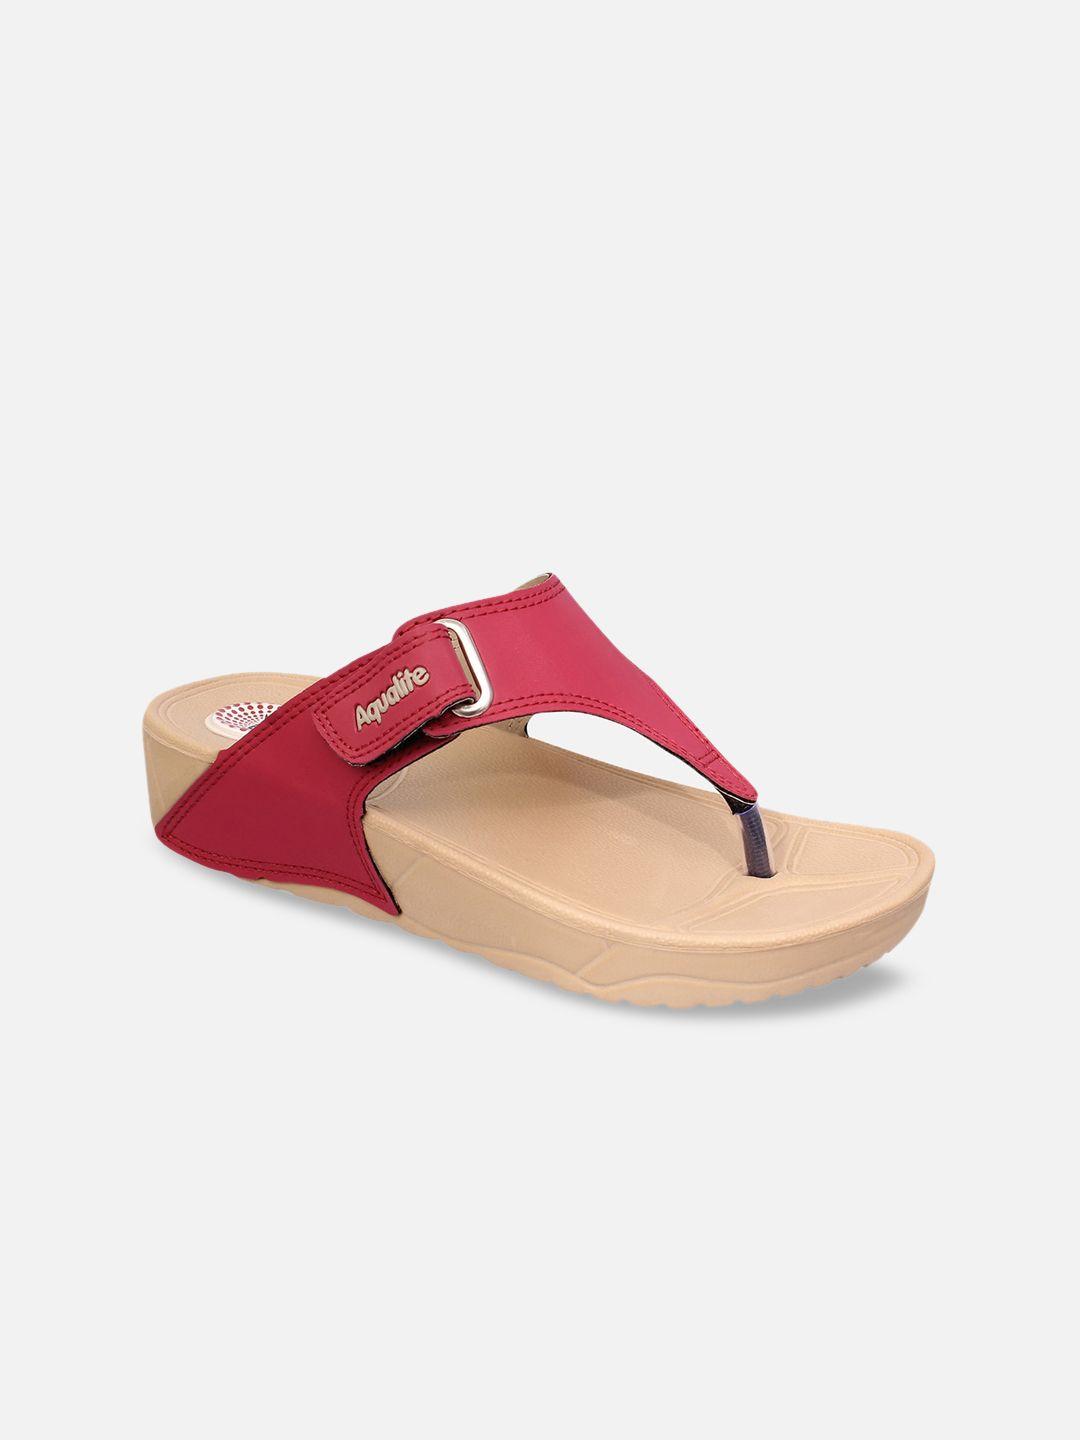 aqualite women maroon open toe flats with buckles